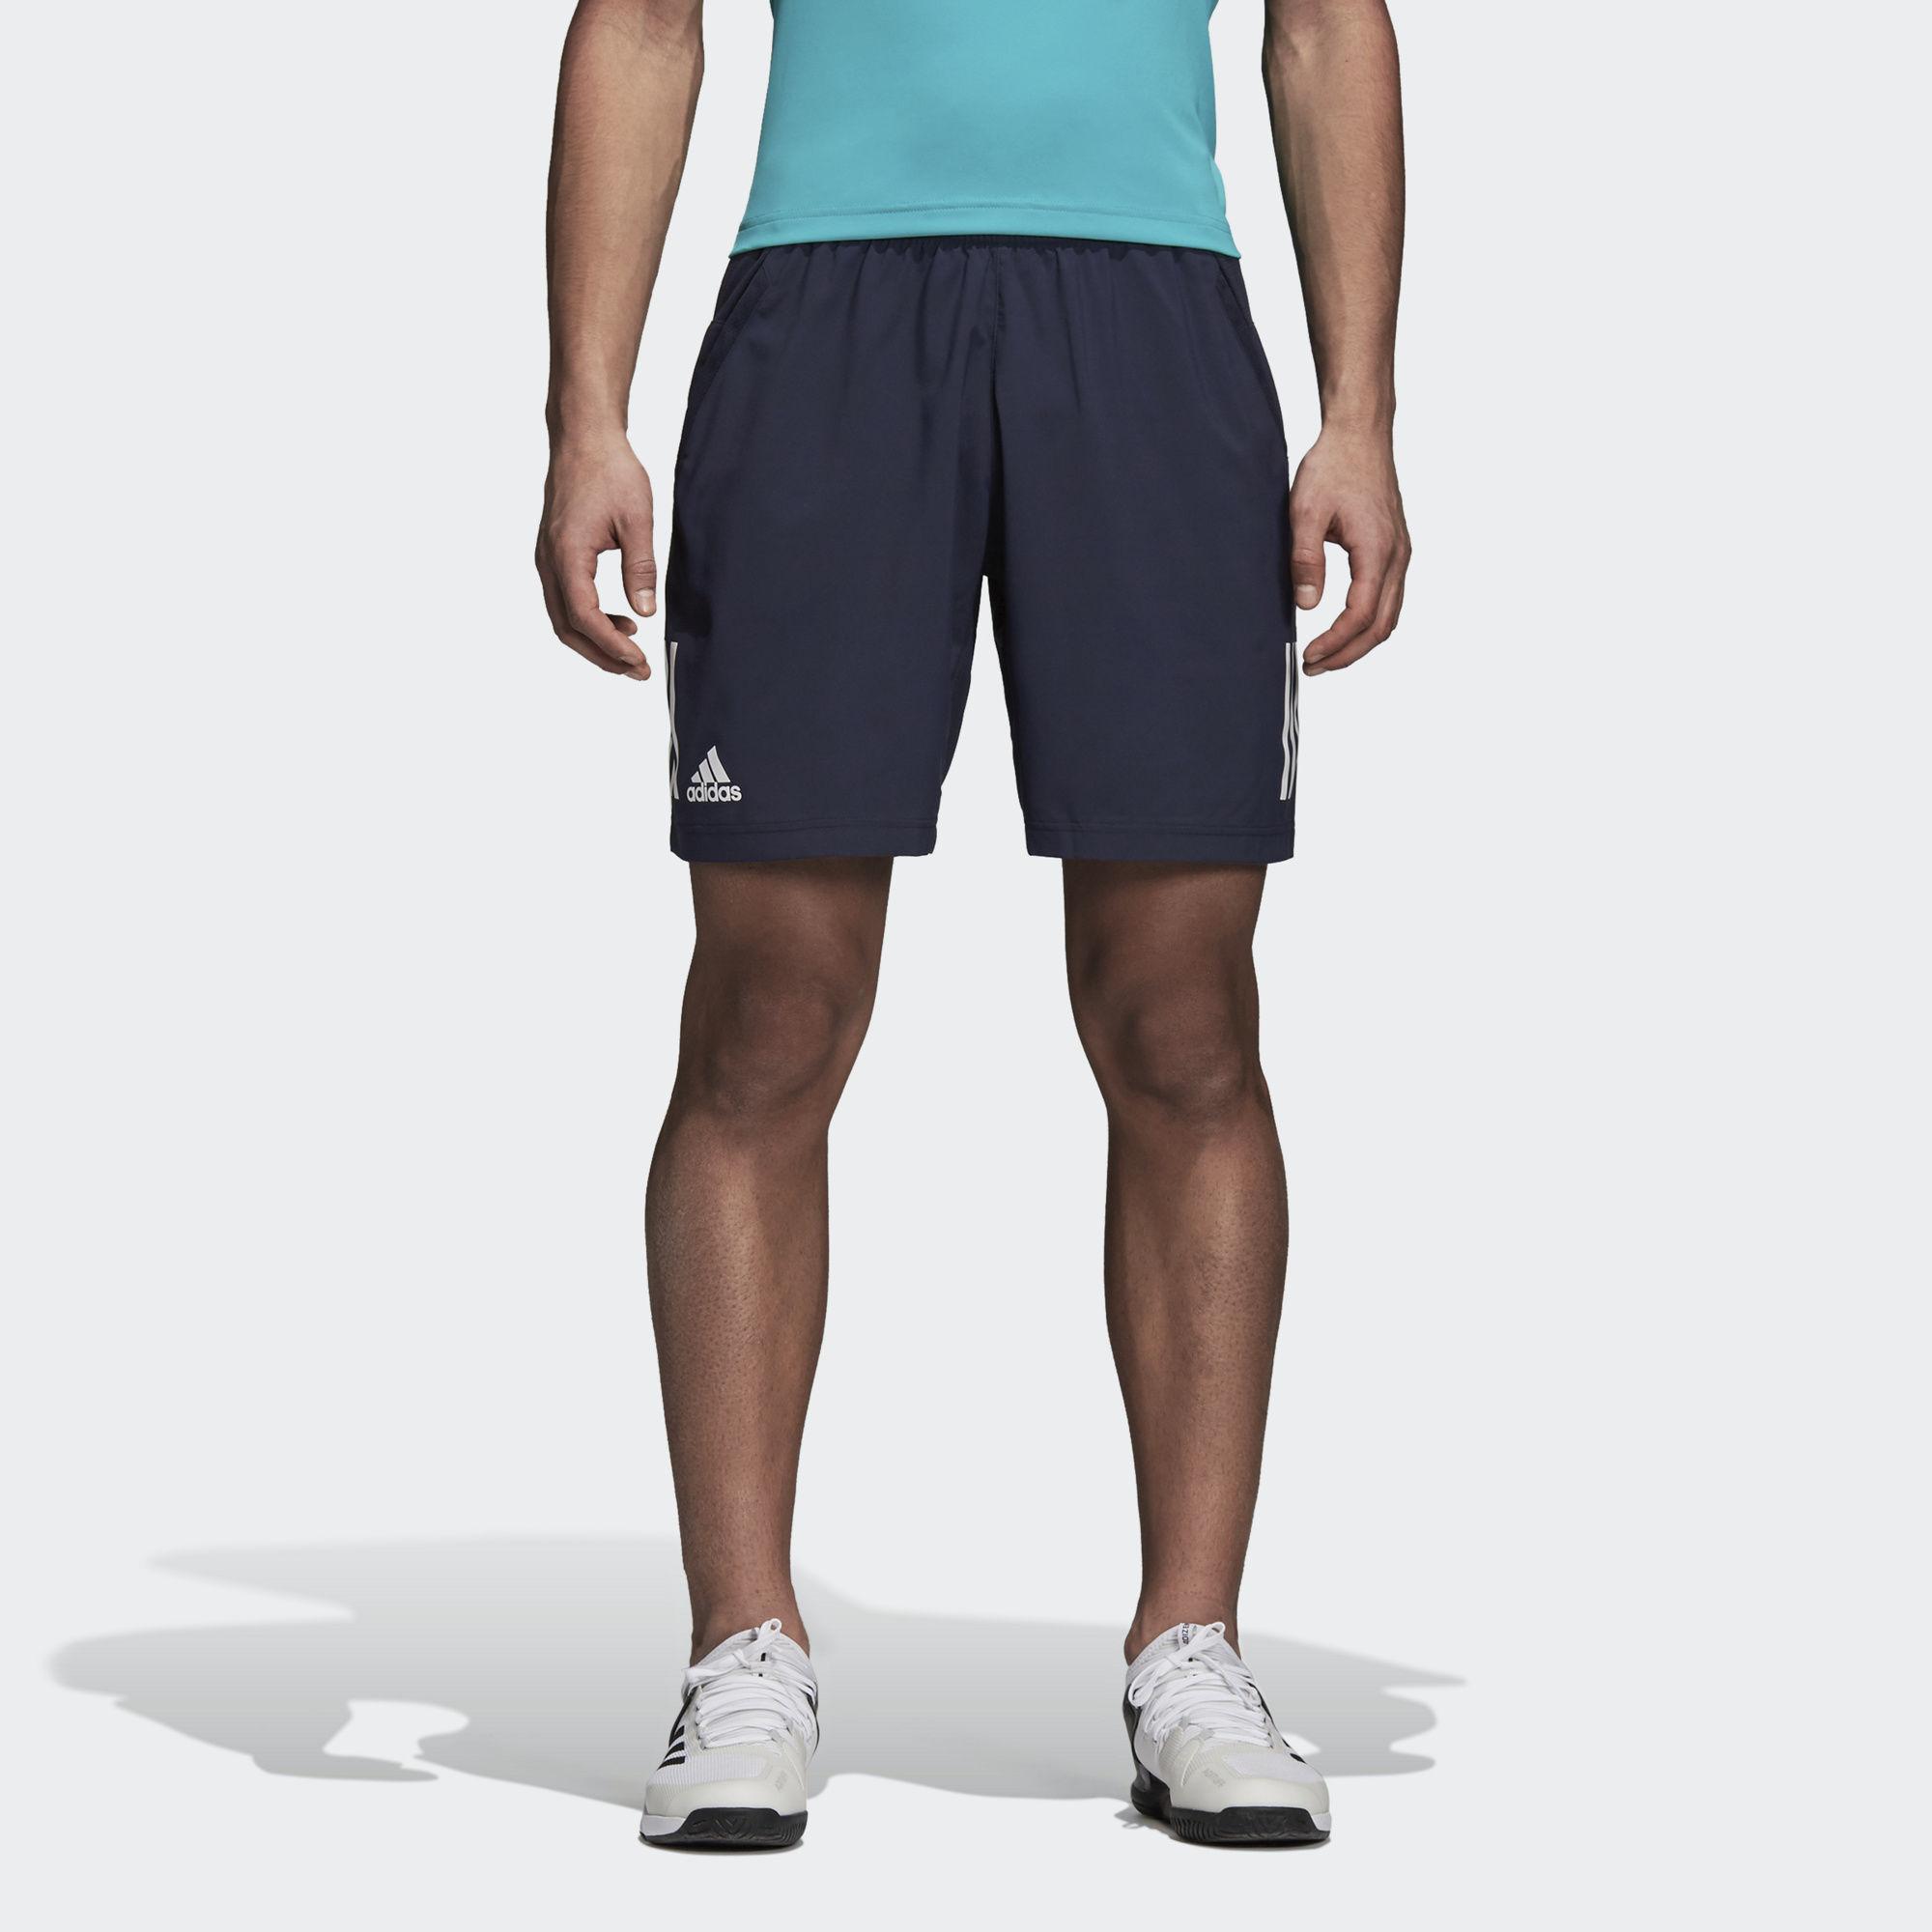 adidas club tennis shorts